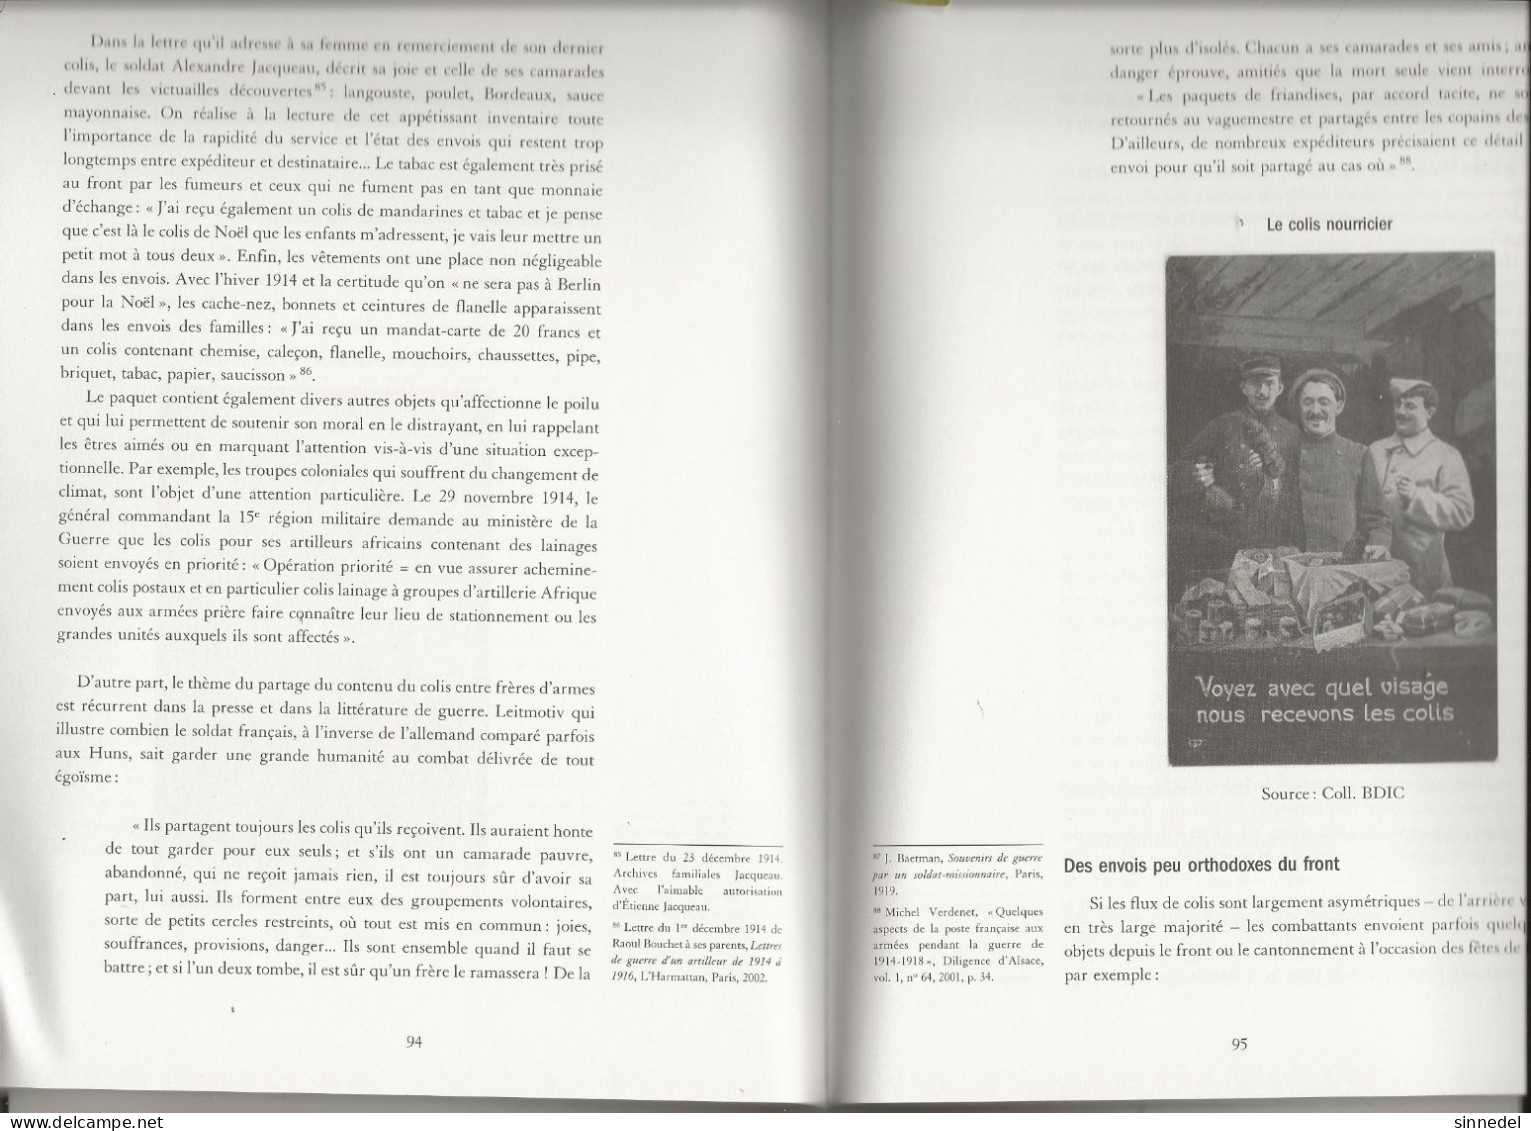 CAHIER DANS LA GUERR 1914 1918 HISTOIRE  DE LA POSTE  155 PAGES EDITION 2014 - Administraciones Postales